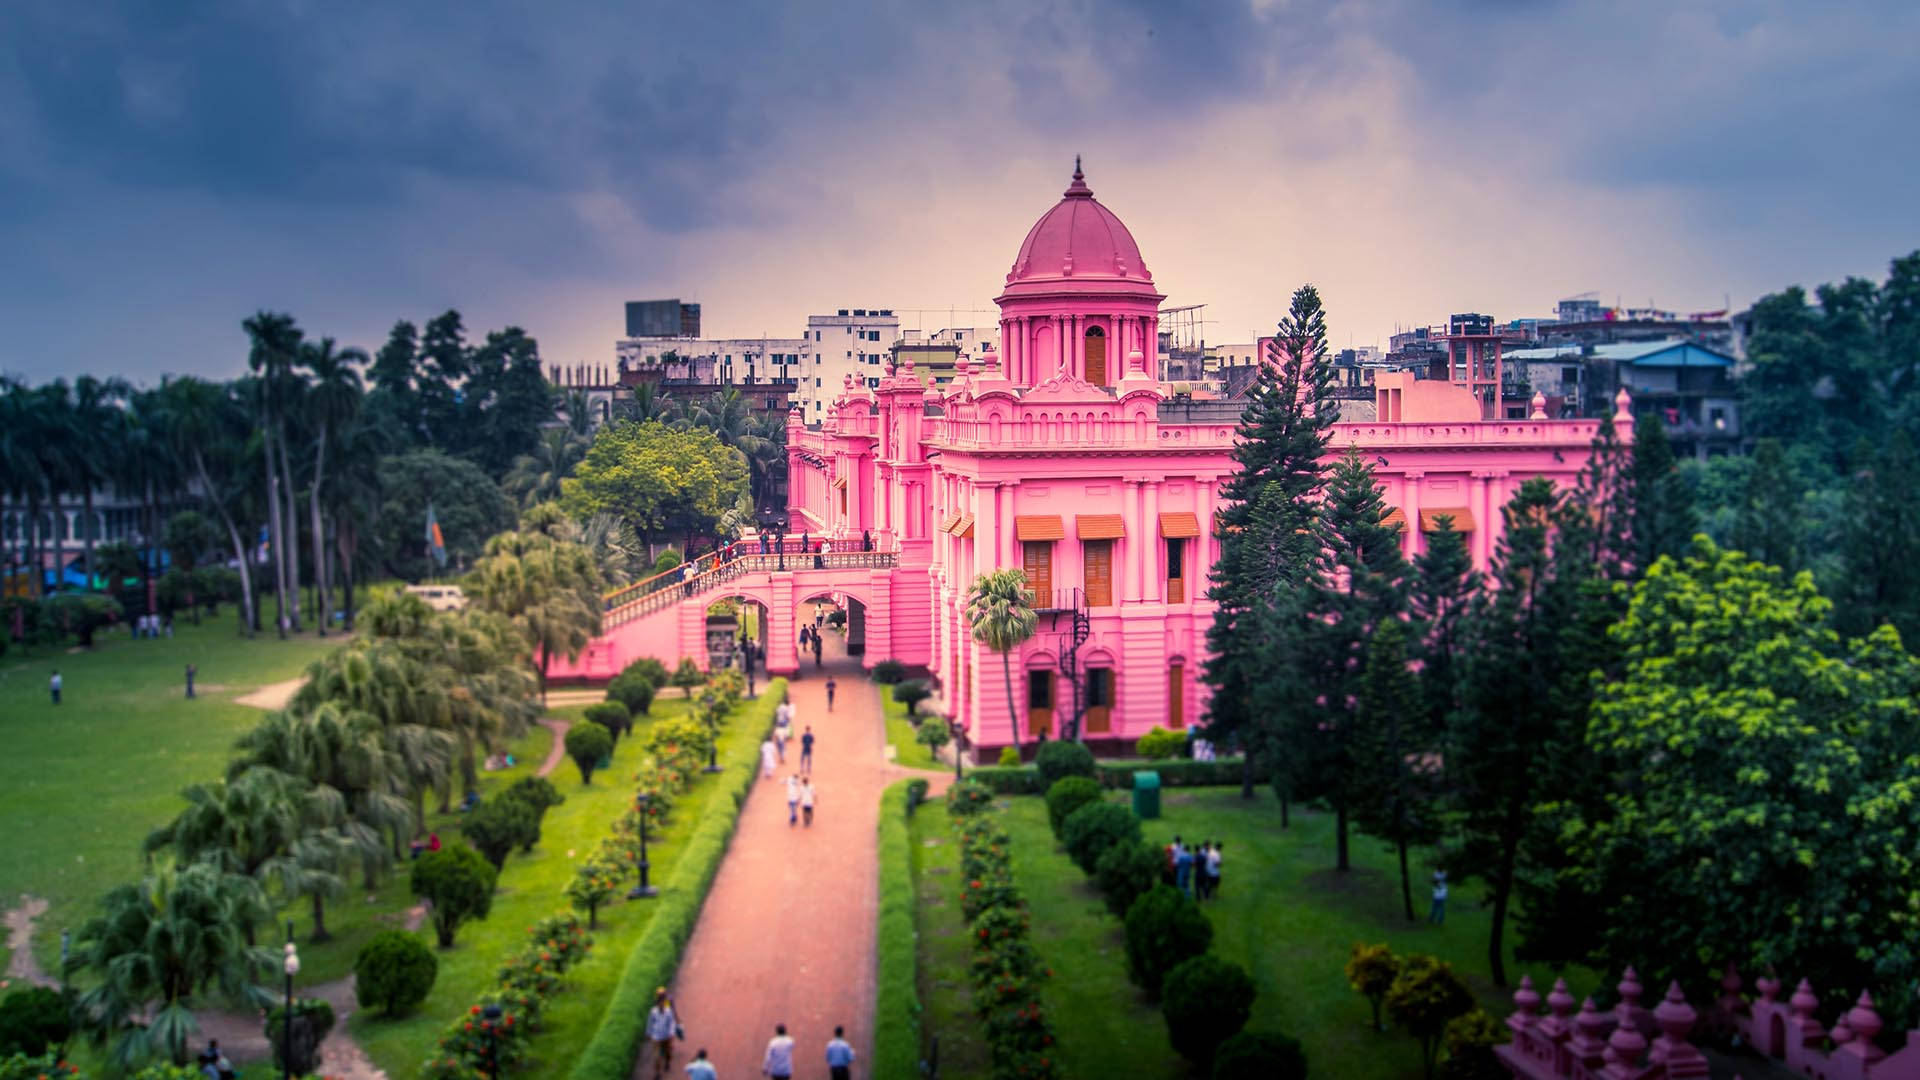 Bangladesh Ahsan Manzil Museum Aerial View